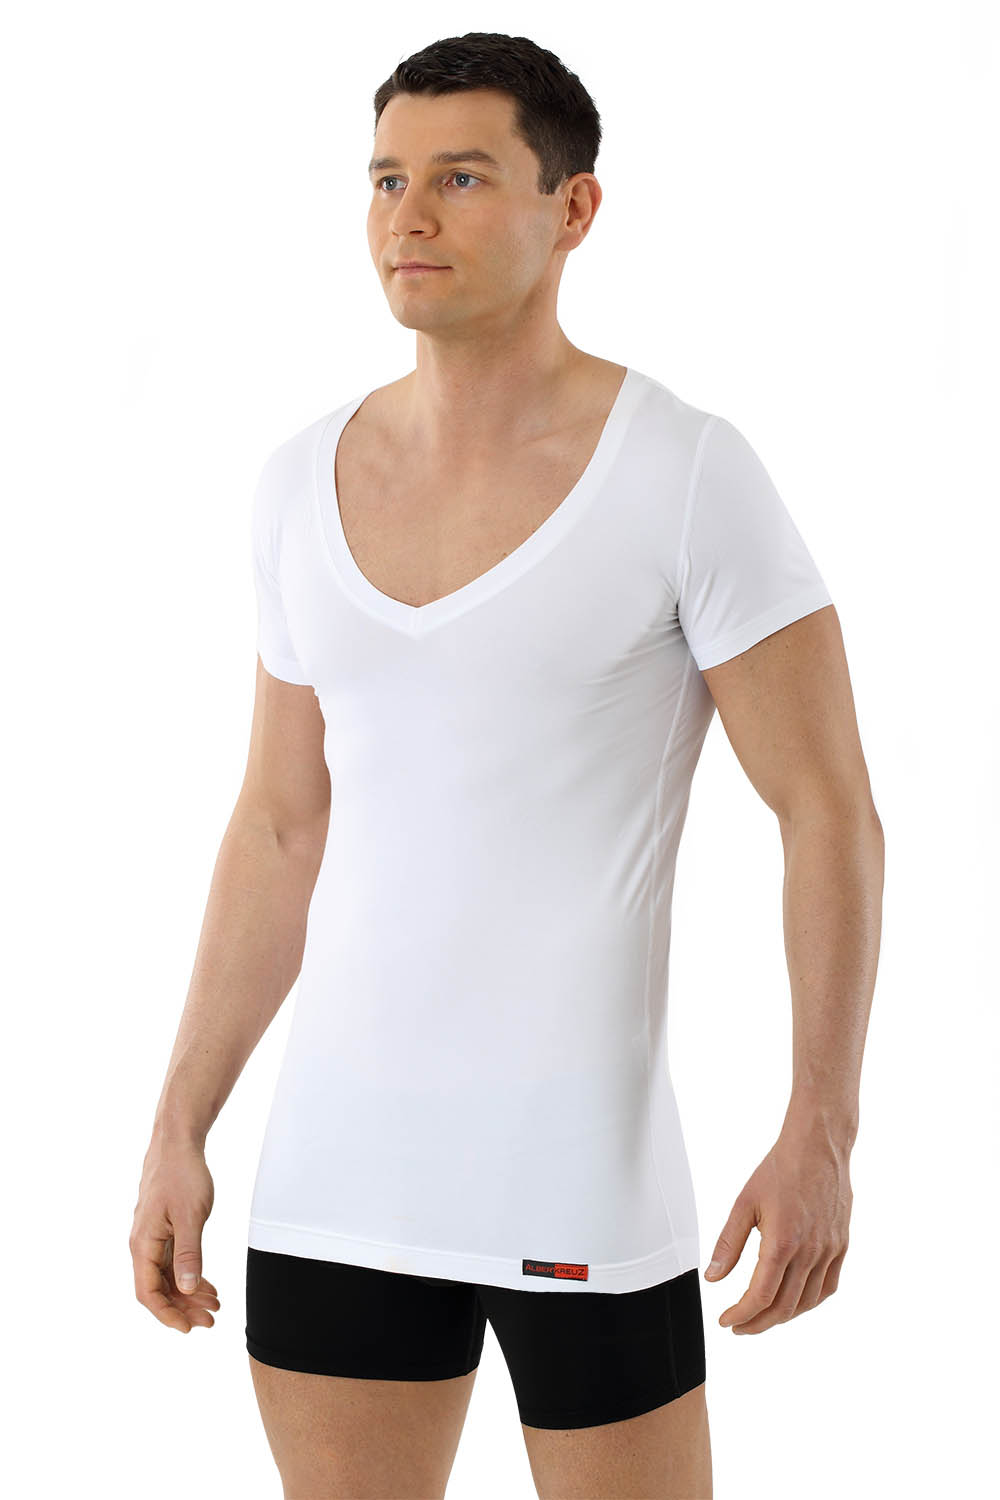 ALBERT KREUZ  Men's functional Coolmax business undershirt with deep v-neck  white